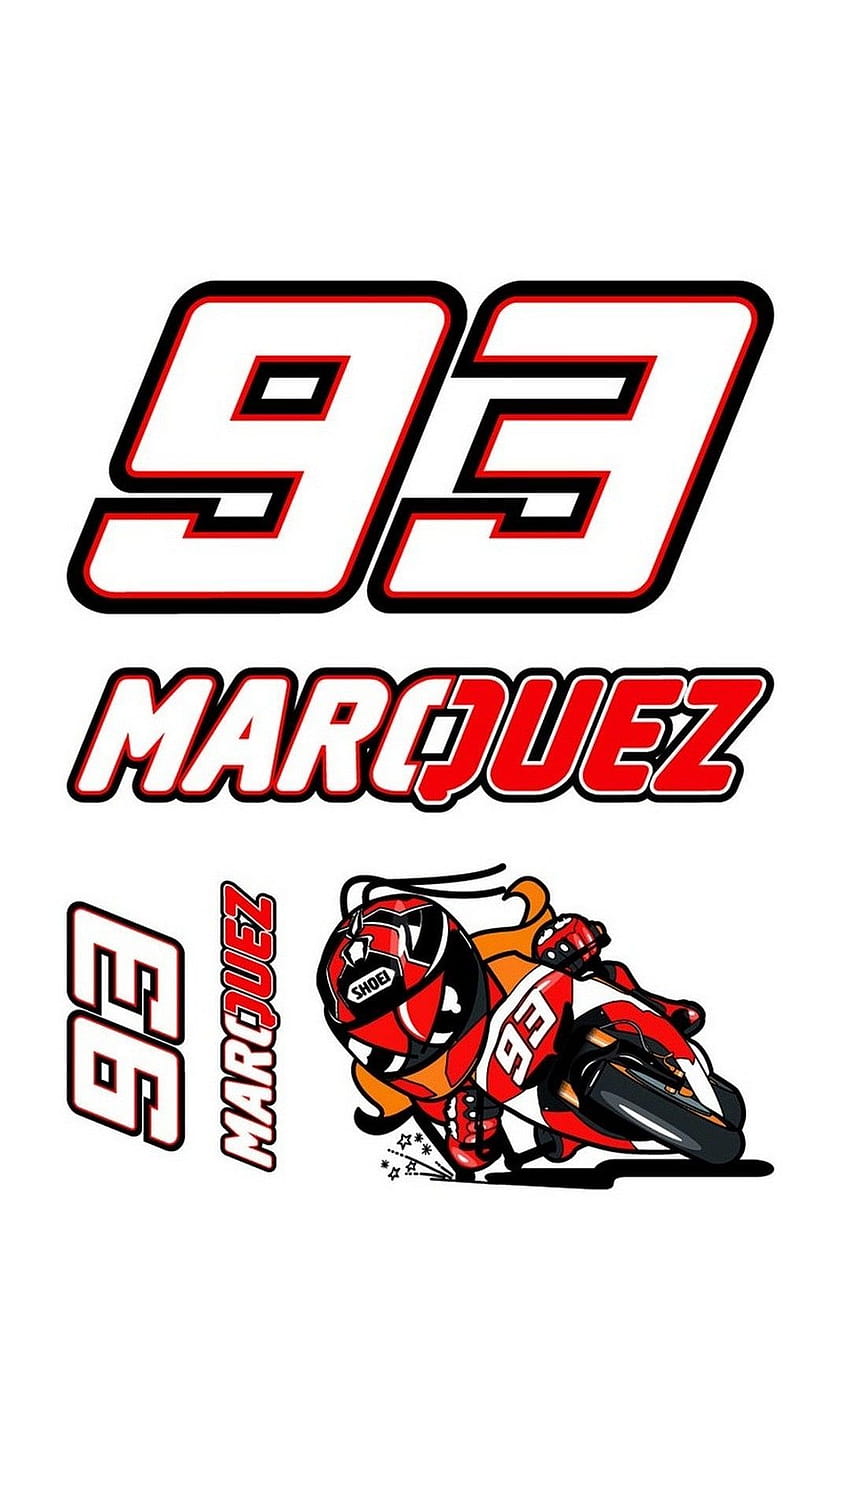 MM93 Tank Pads | Marc Márquez for motorcycle Universal - Puig Hi-Tech Parts